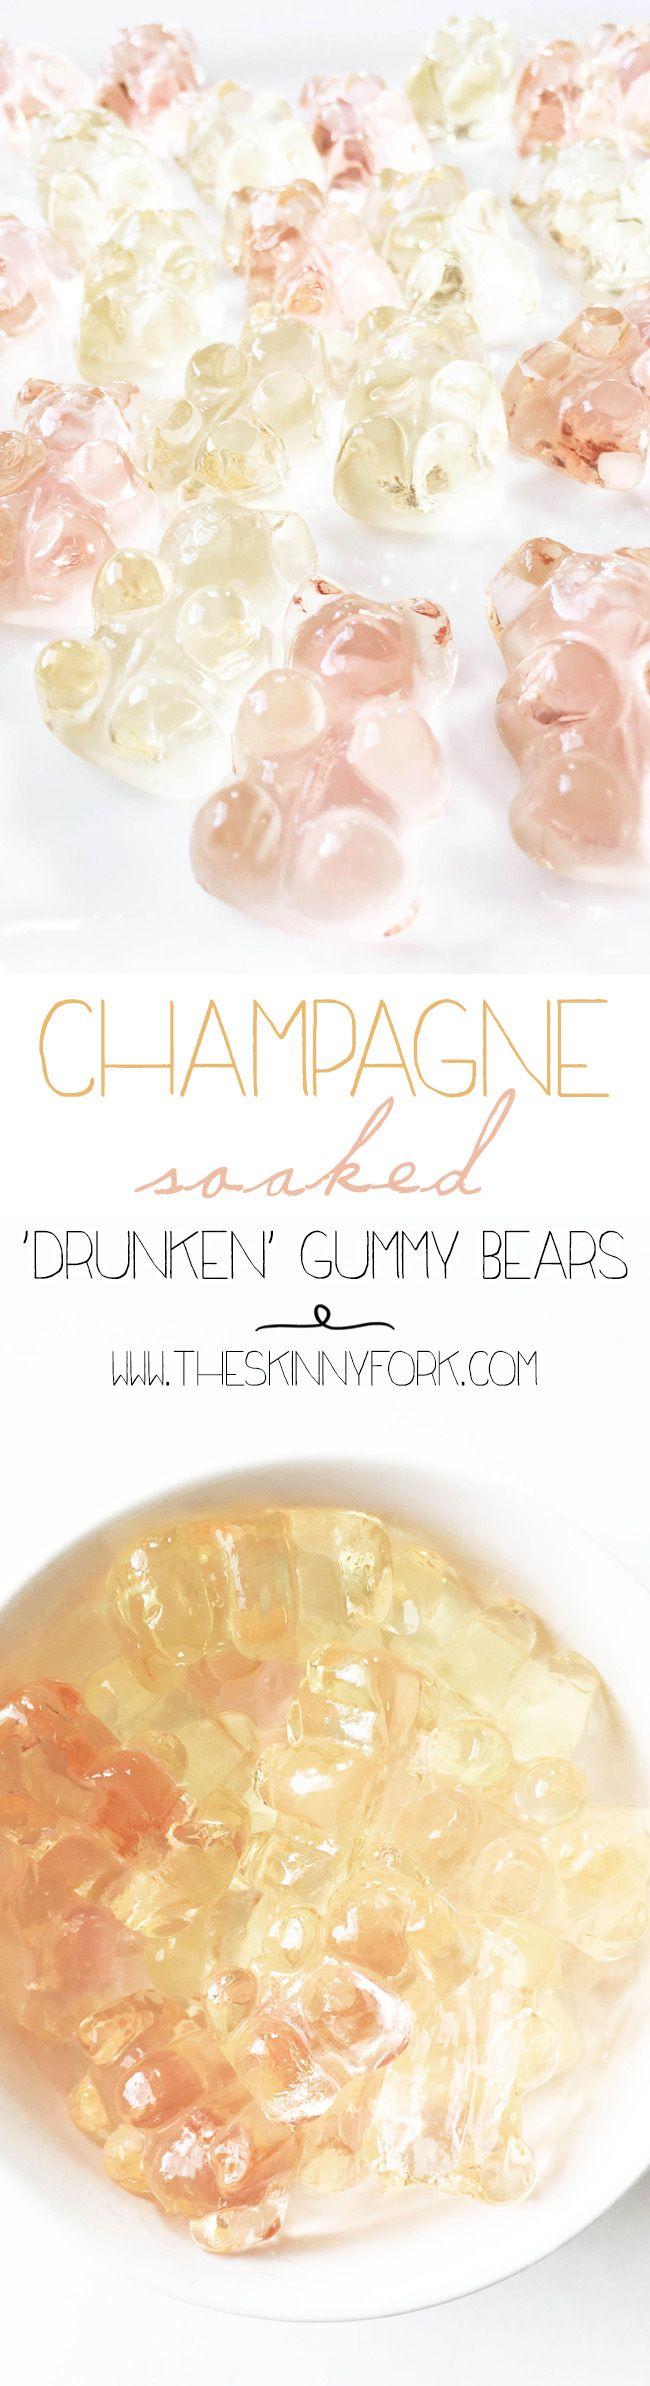 Mariage - Champagne Soaked 'Drunken' Gummy Bears